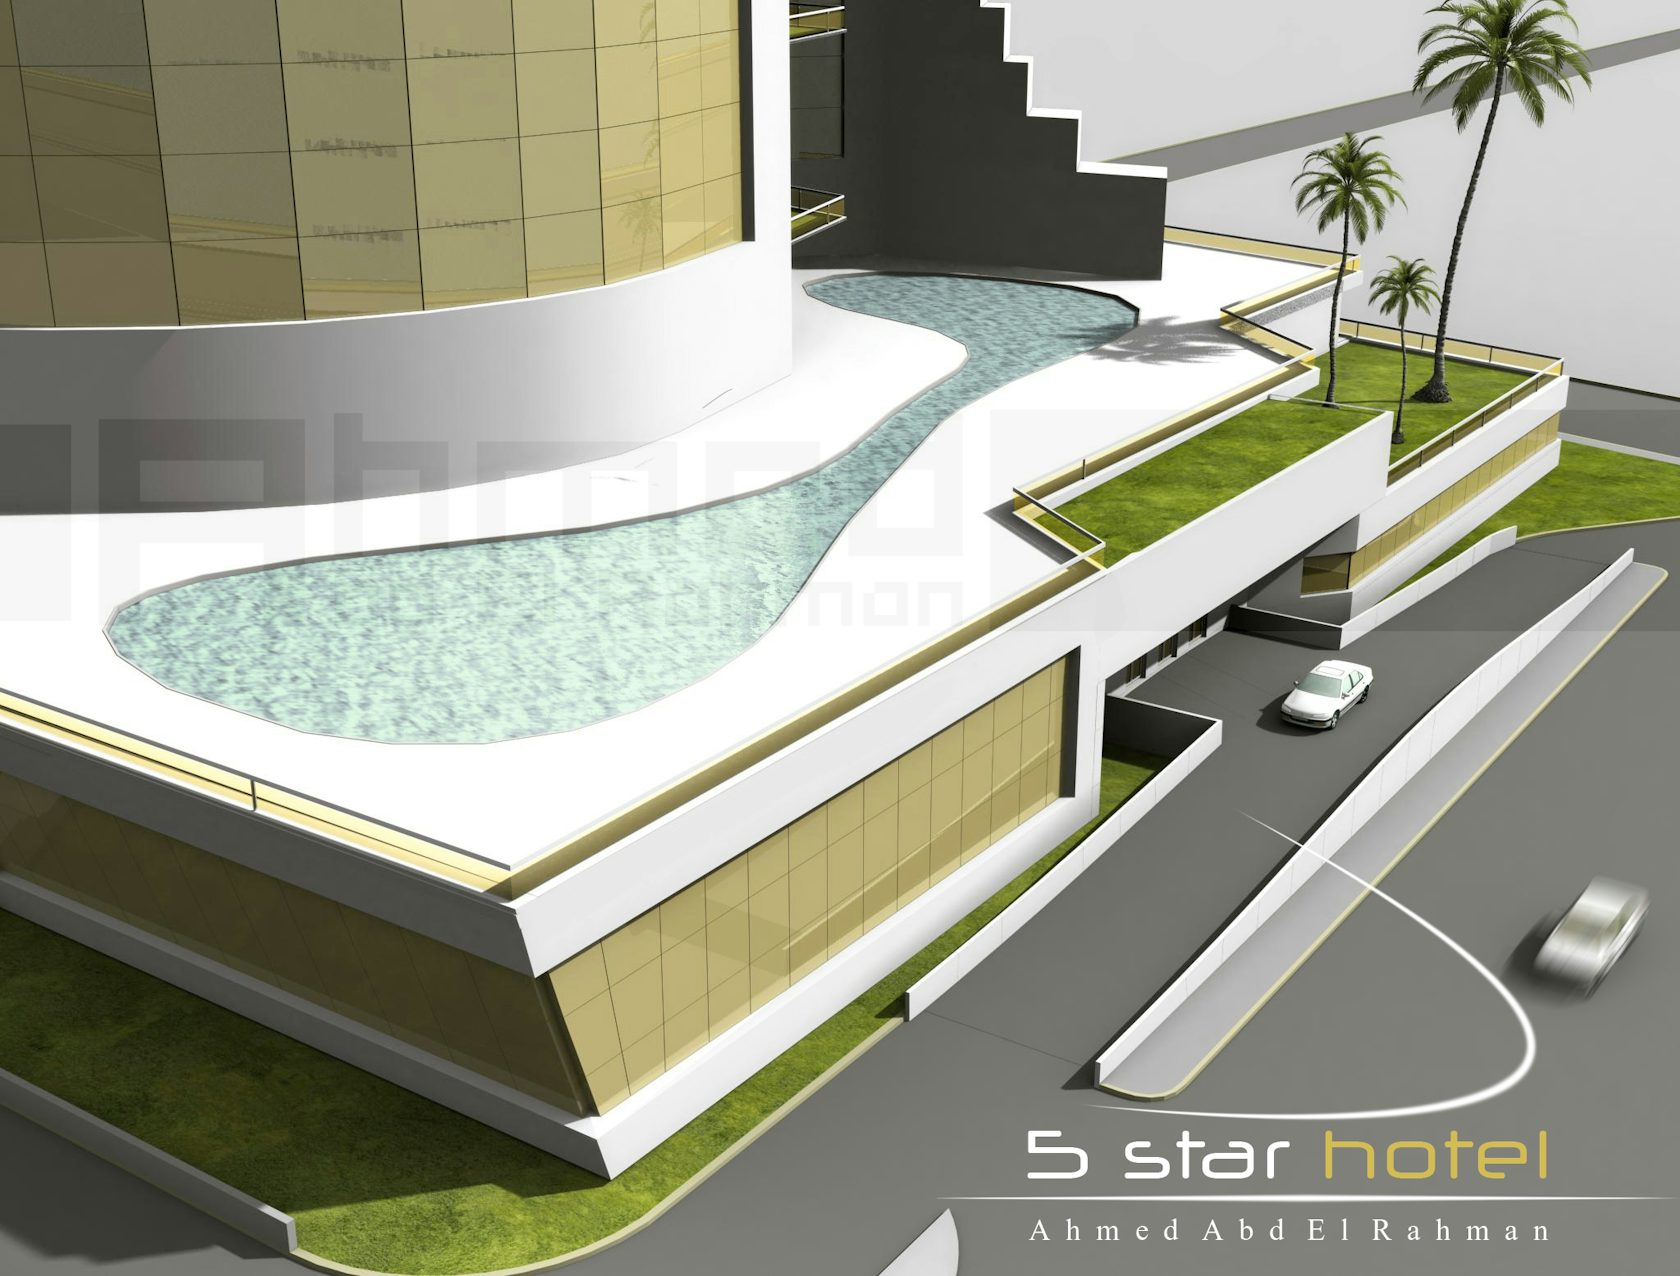 5 star hotel building